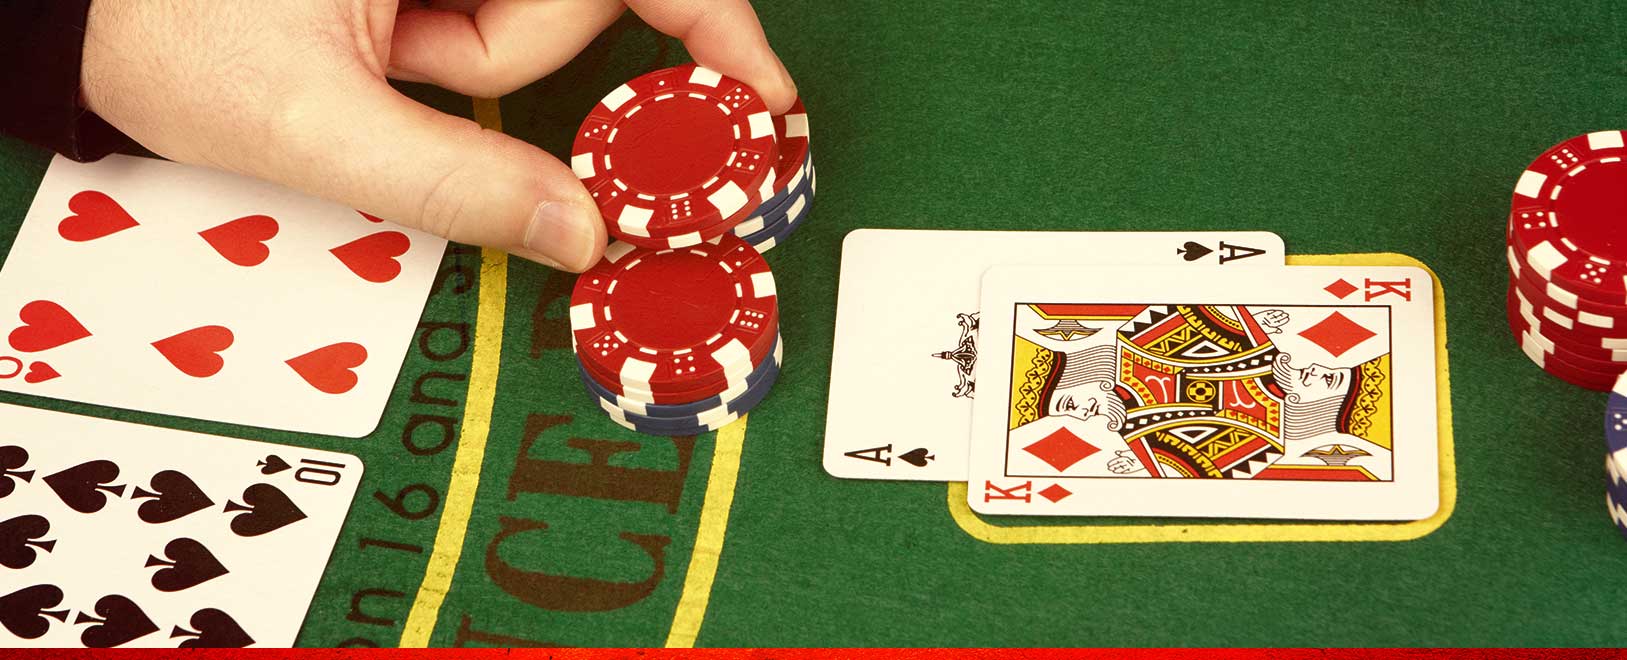 Blackjack Strategies: Double Down in Online Blackjack | Ignition Casino